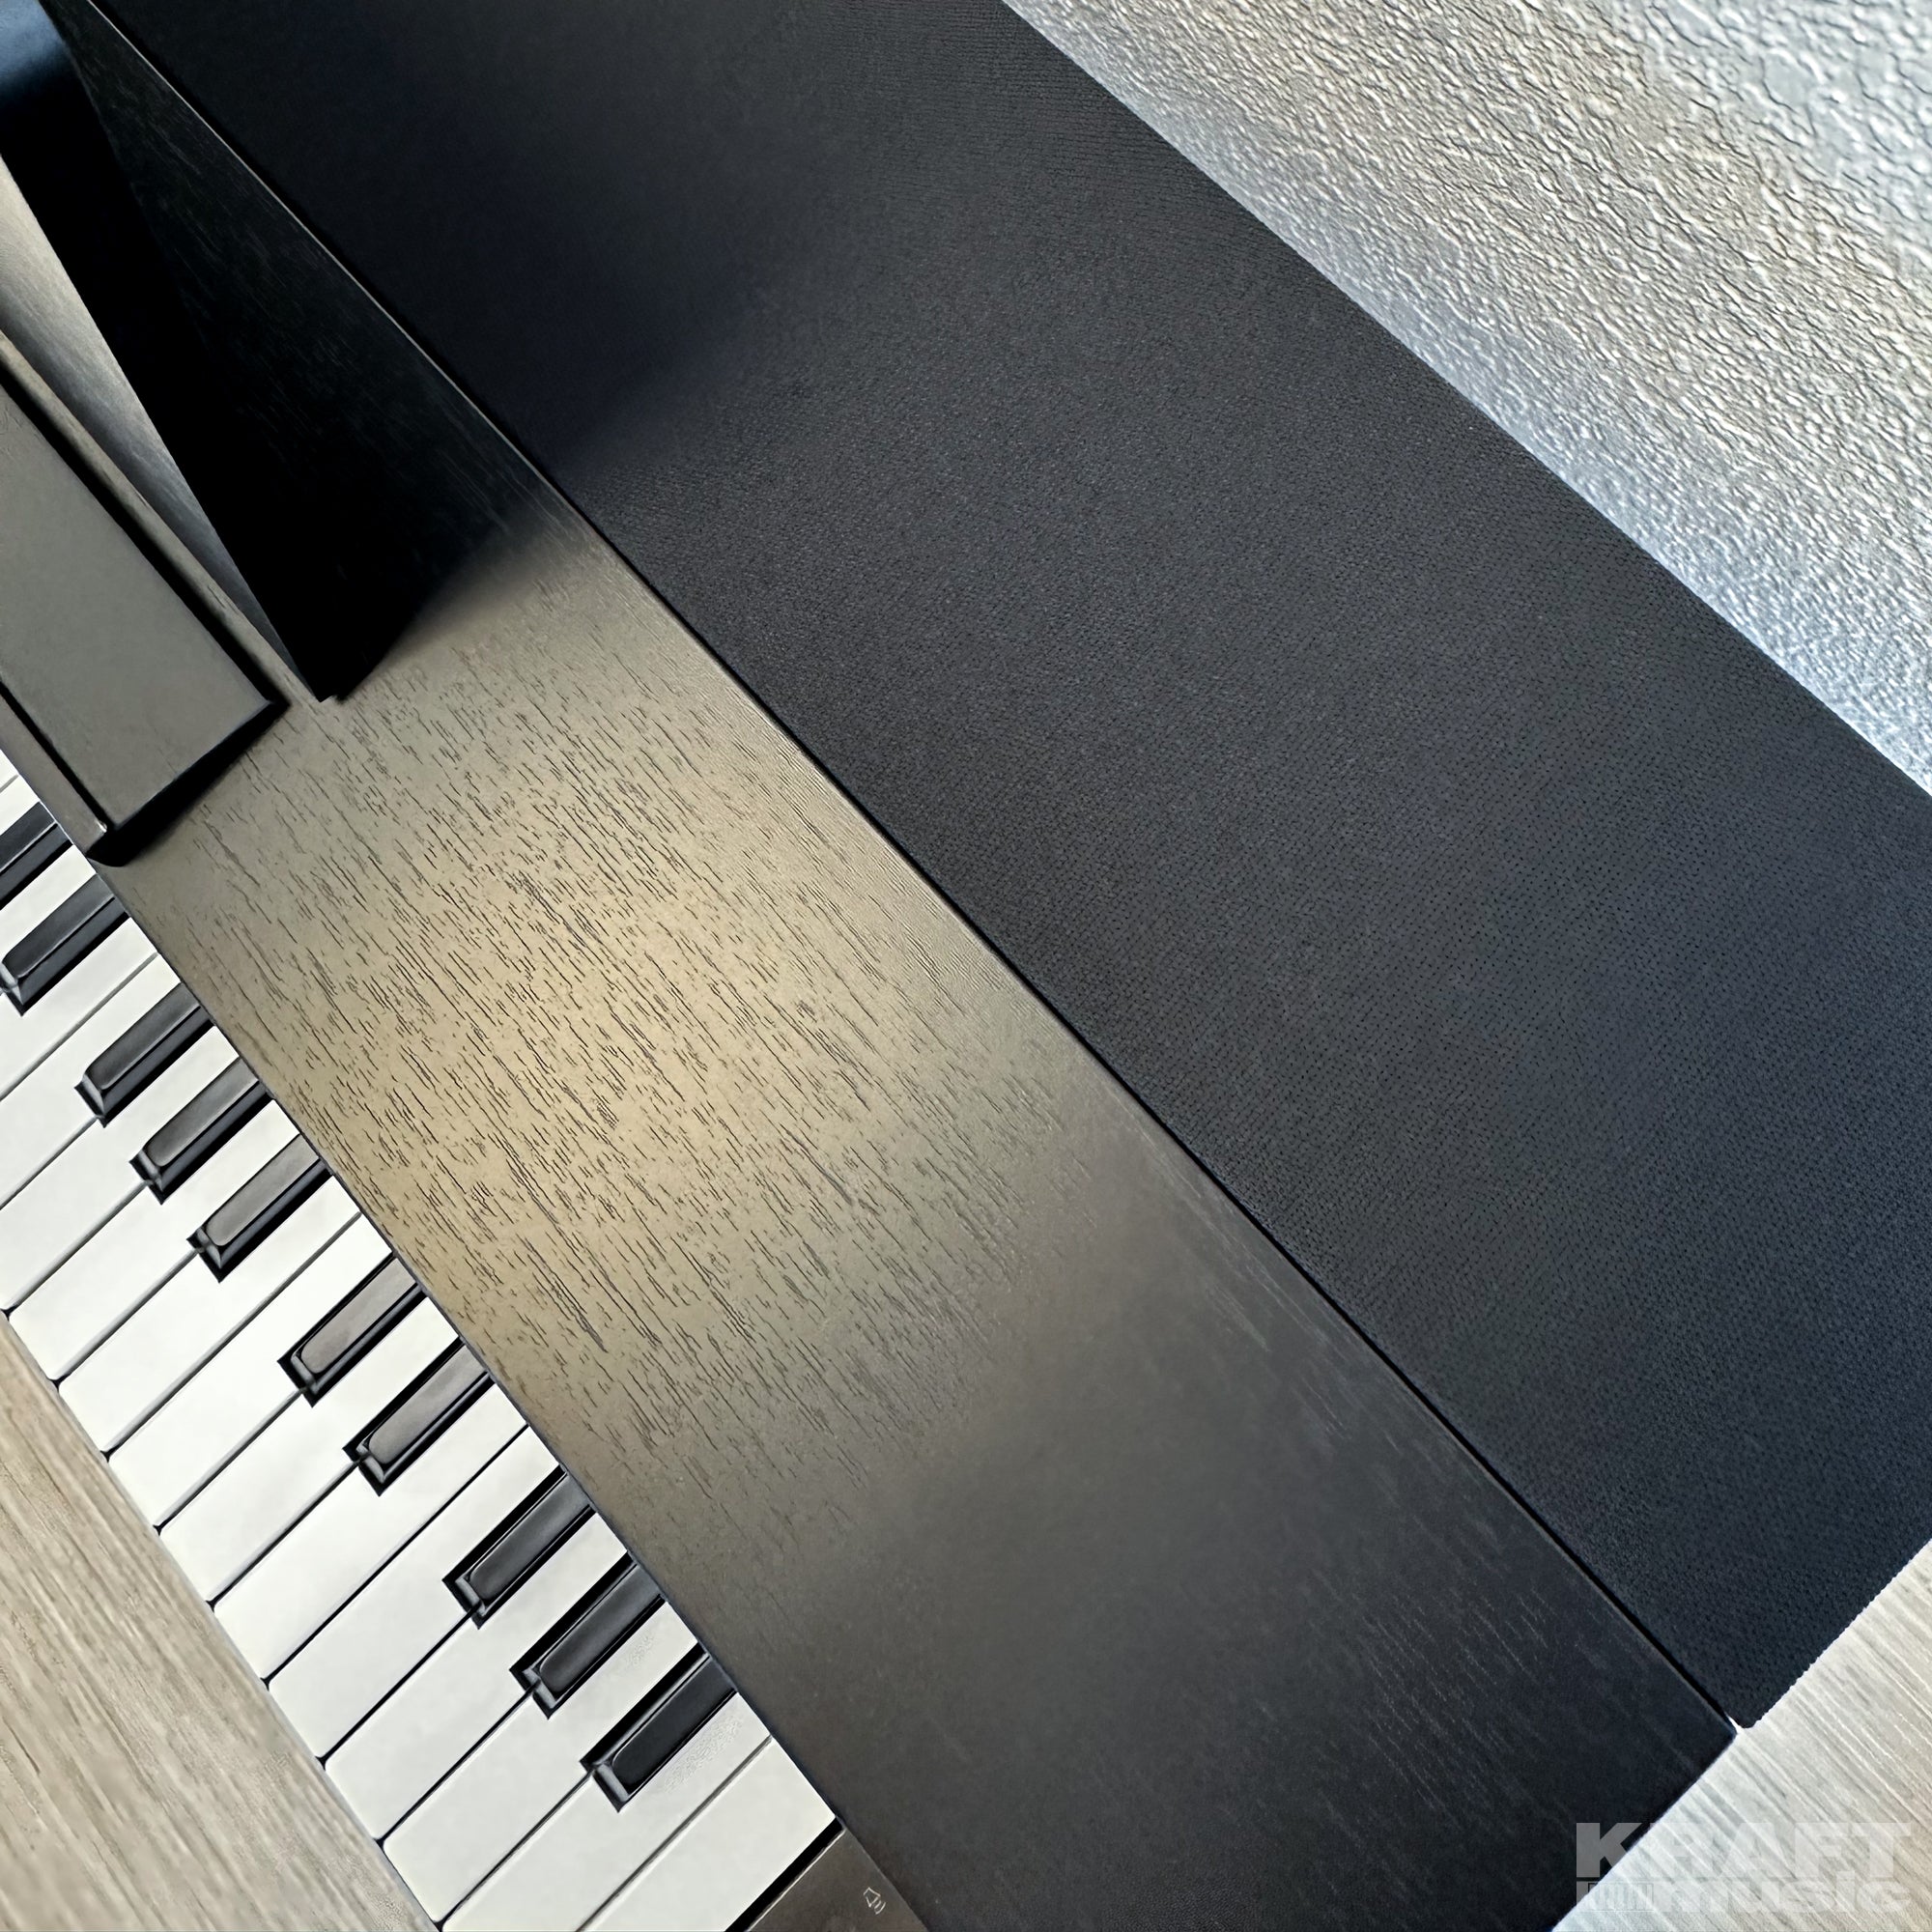 Kawai CN301 Digital Piano - Satin Black - Upper speaker